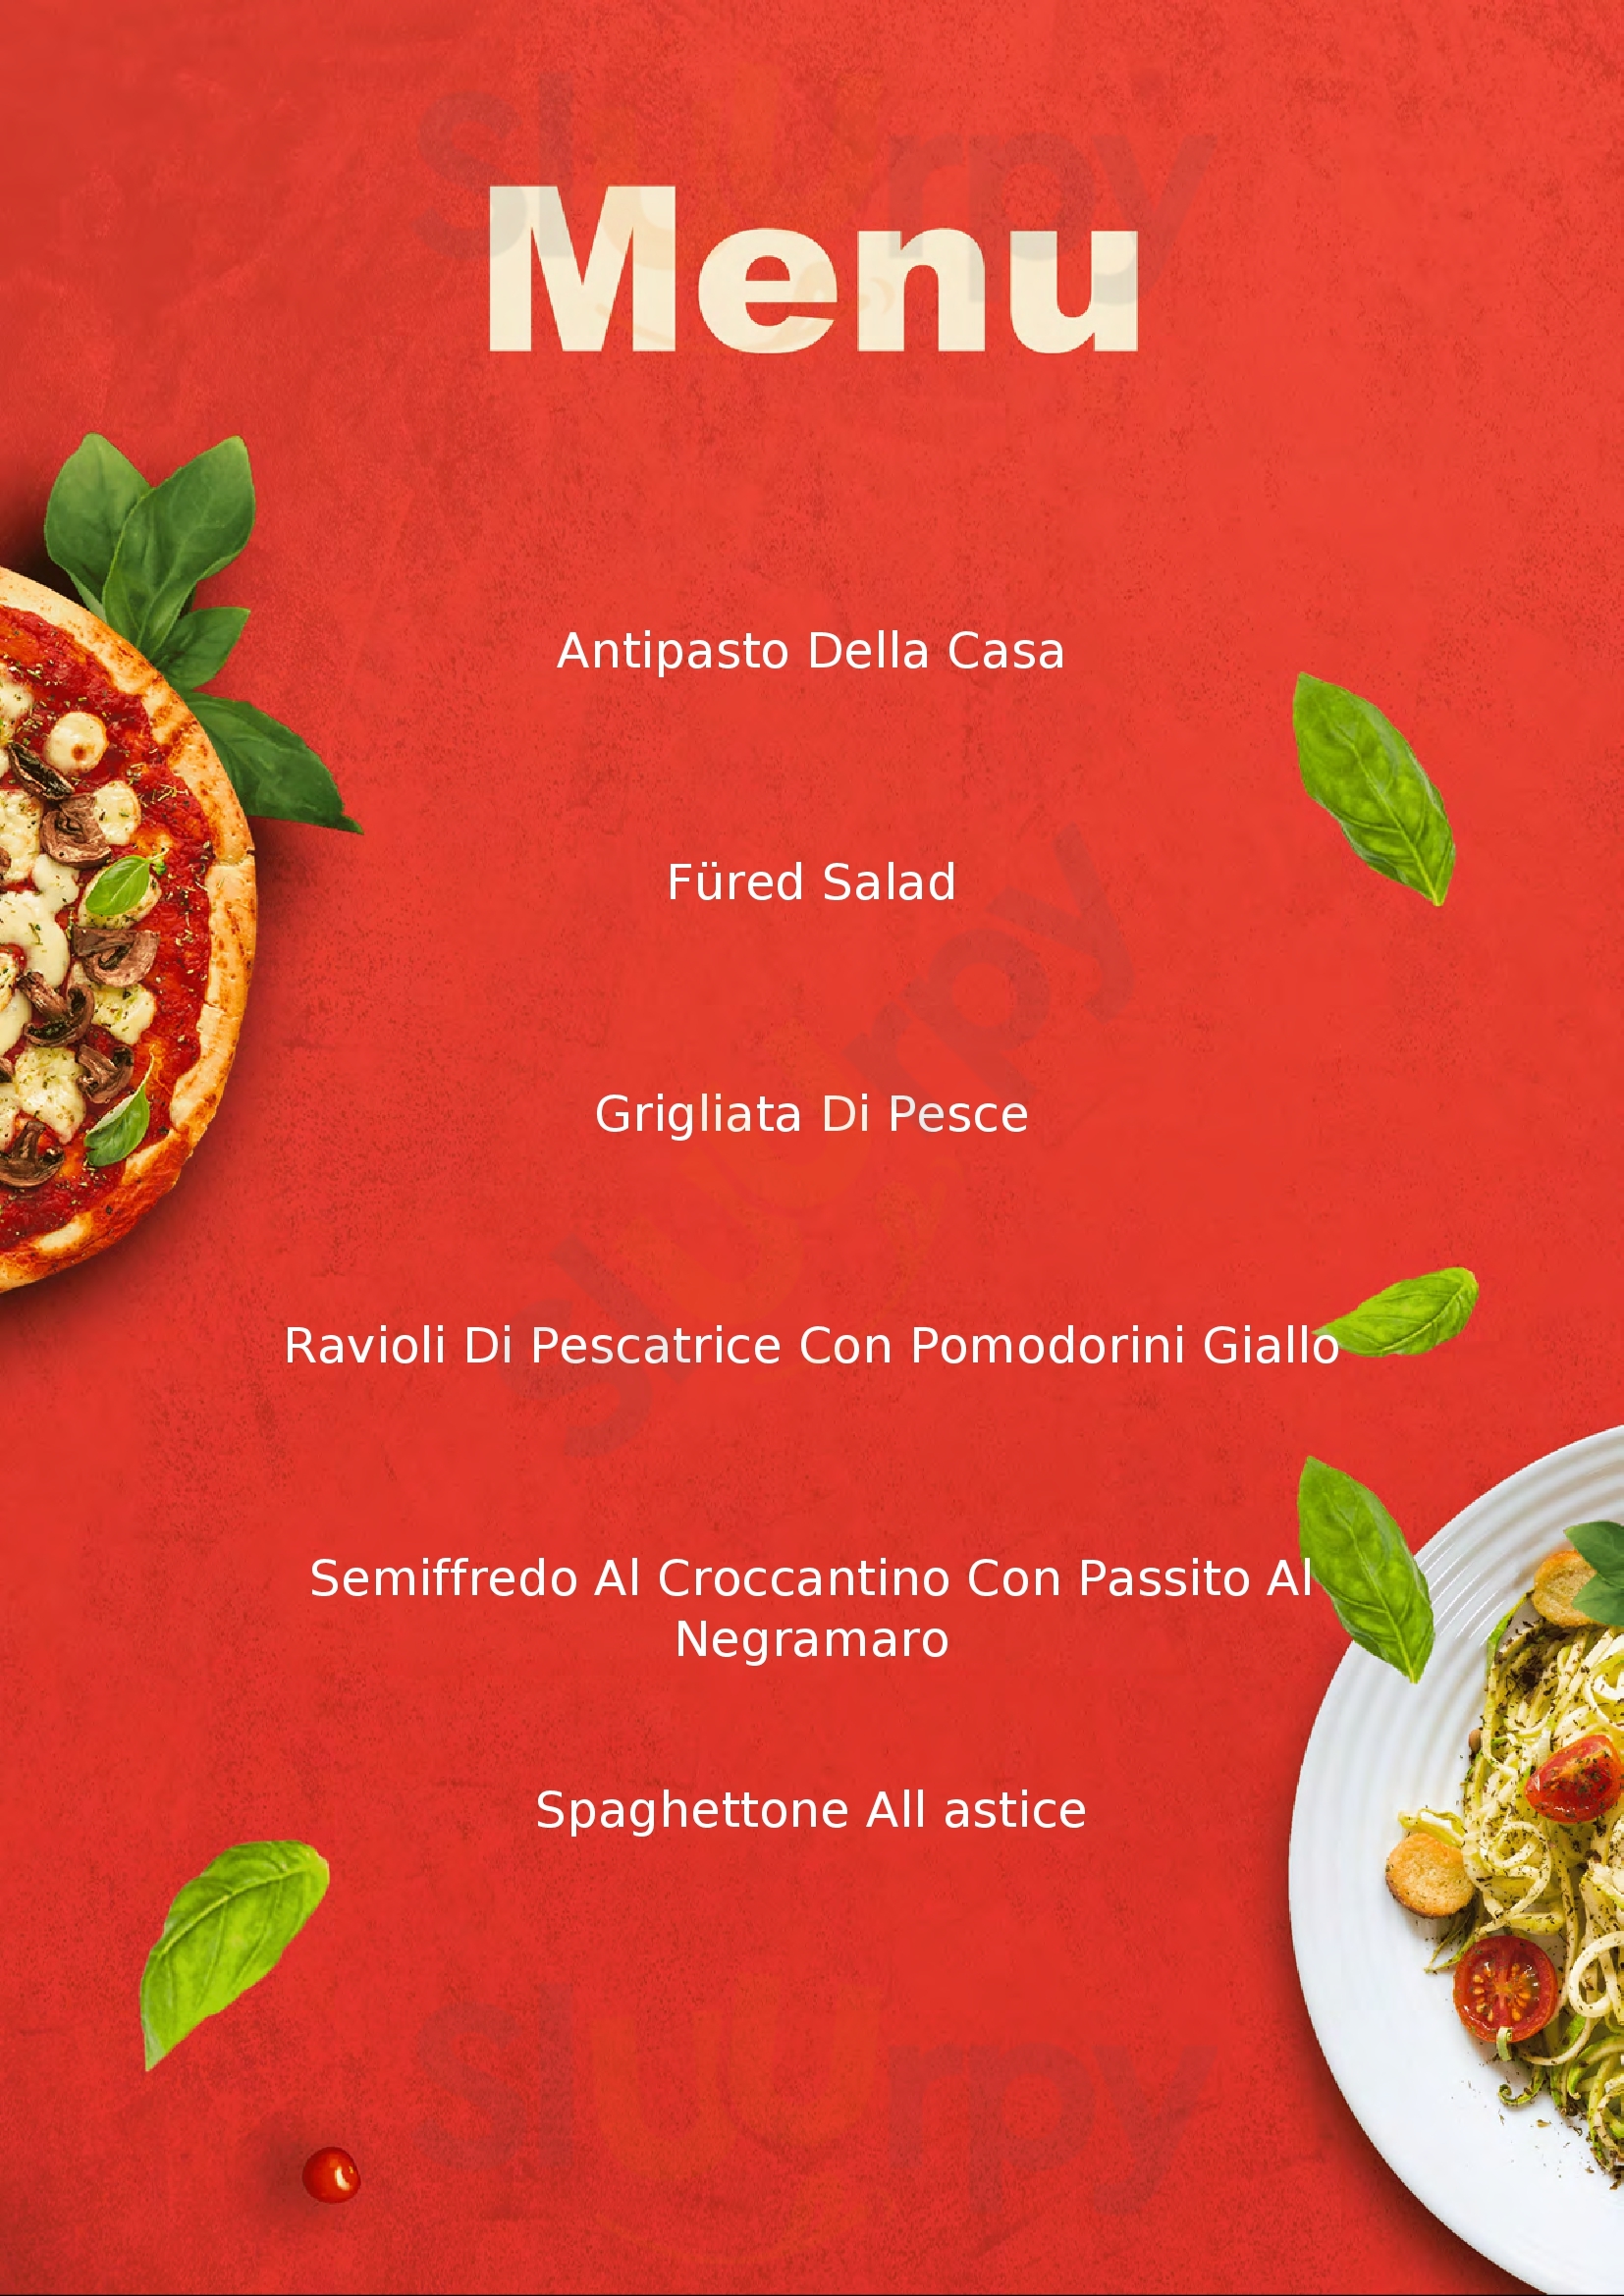 Terra Degli Ulivi Restaurant Giurdignano menù 1 pagina